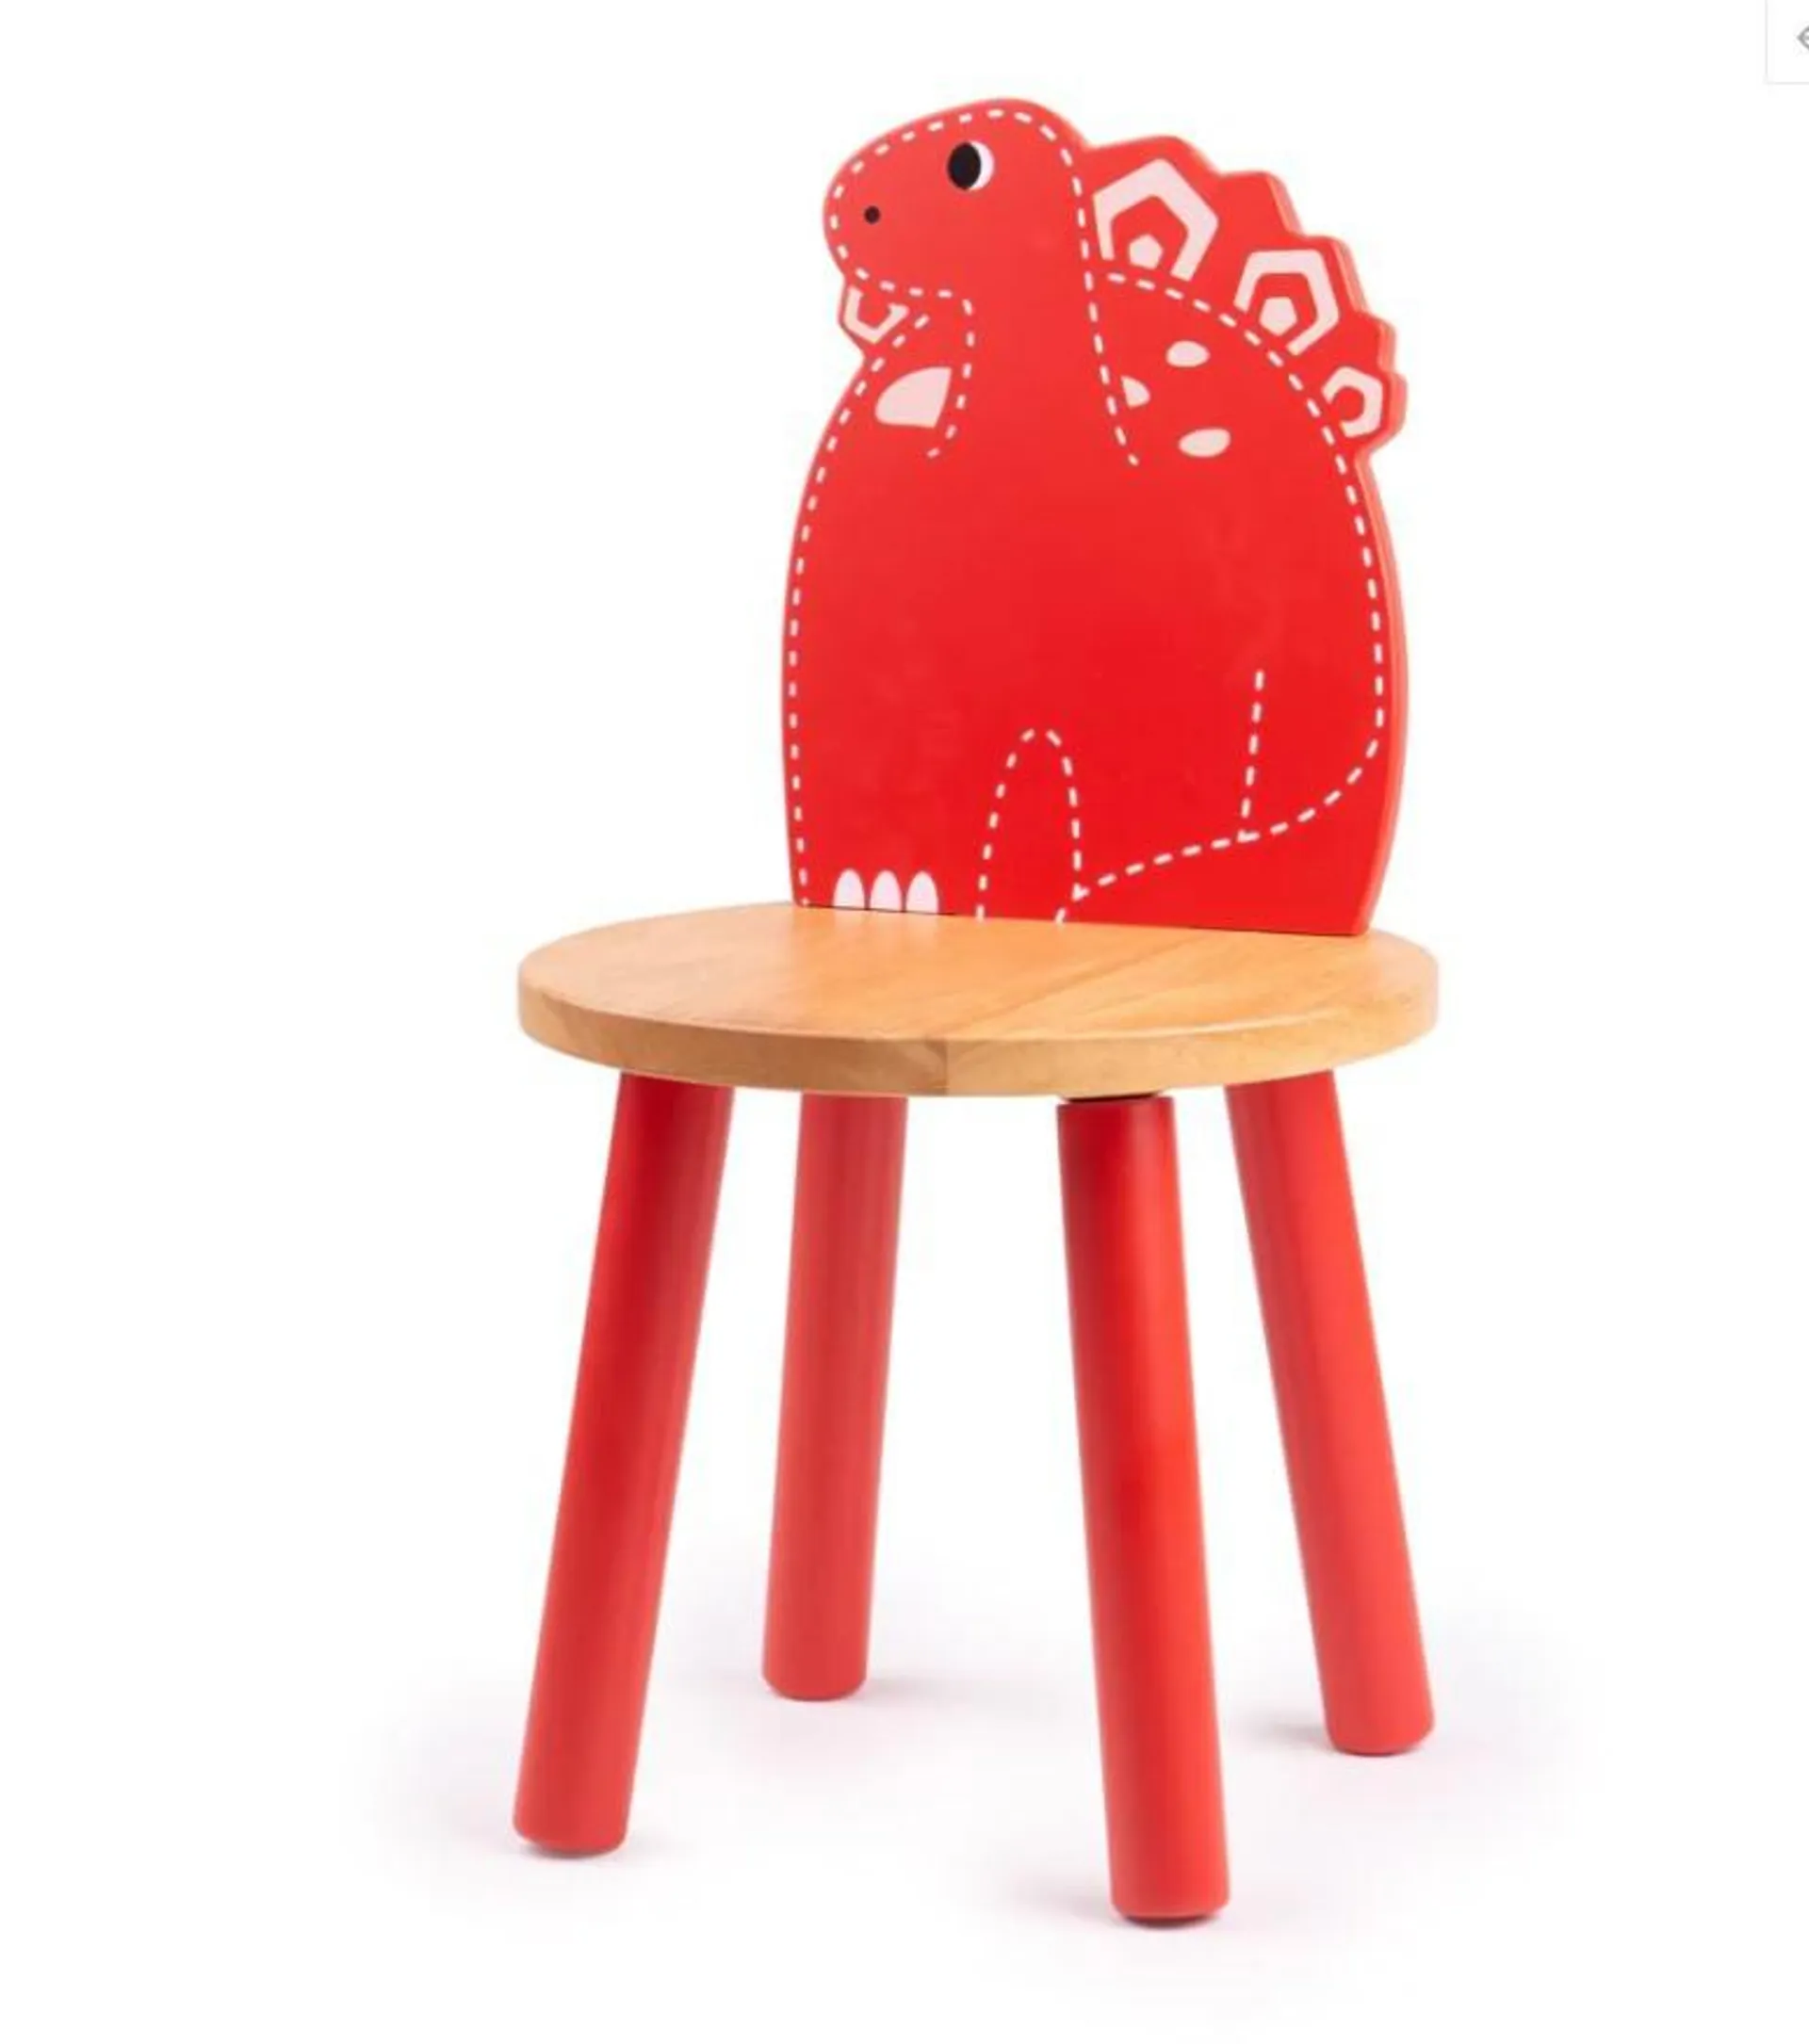 Tidlo Stegosaurus Wooden Chair